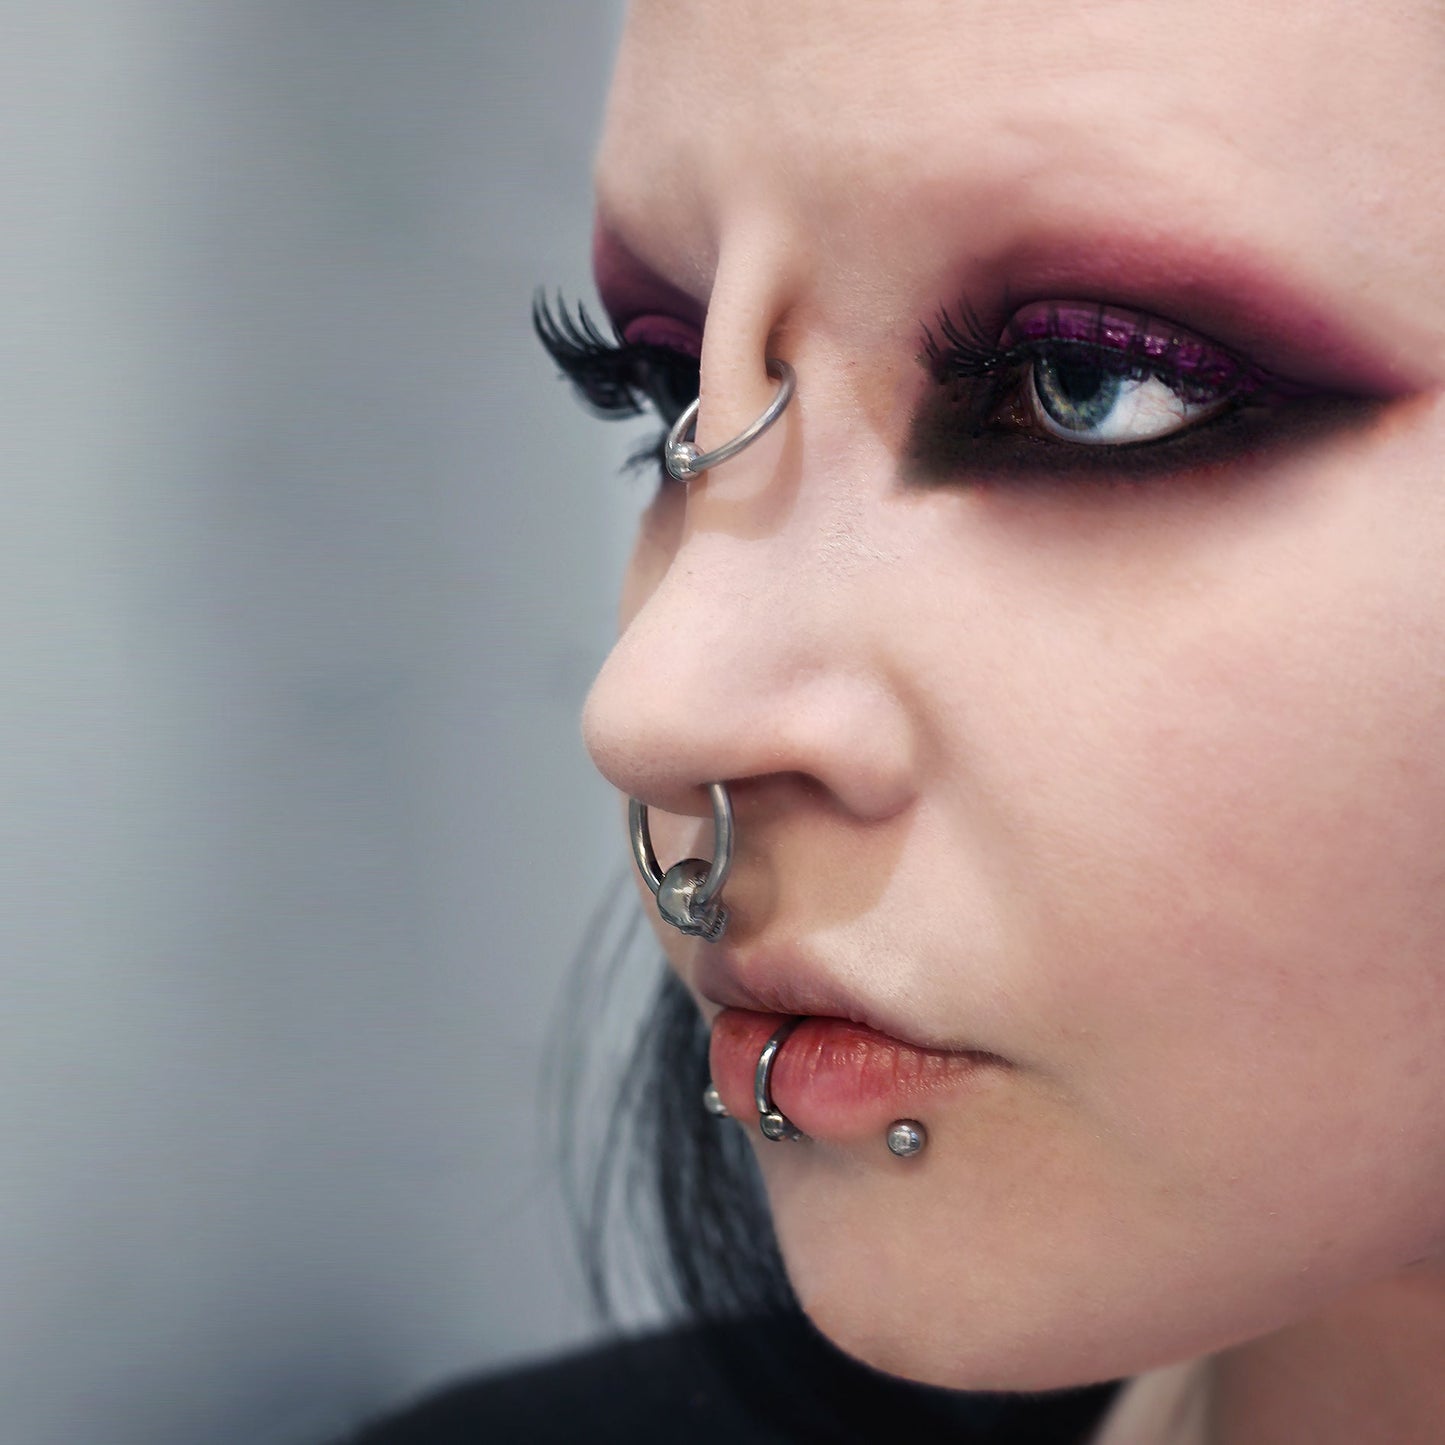 Woman with dark makeup wearing a nose bridge piercing prosthetic